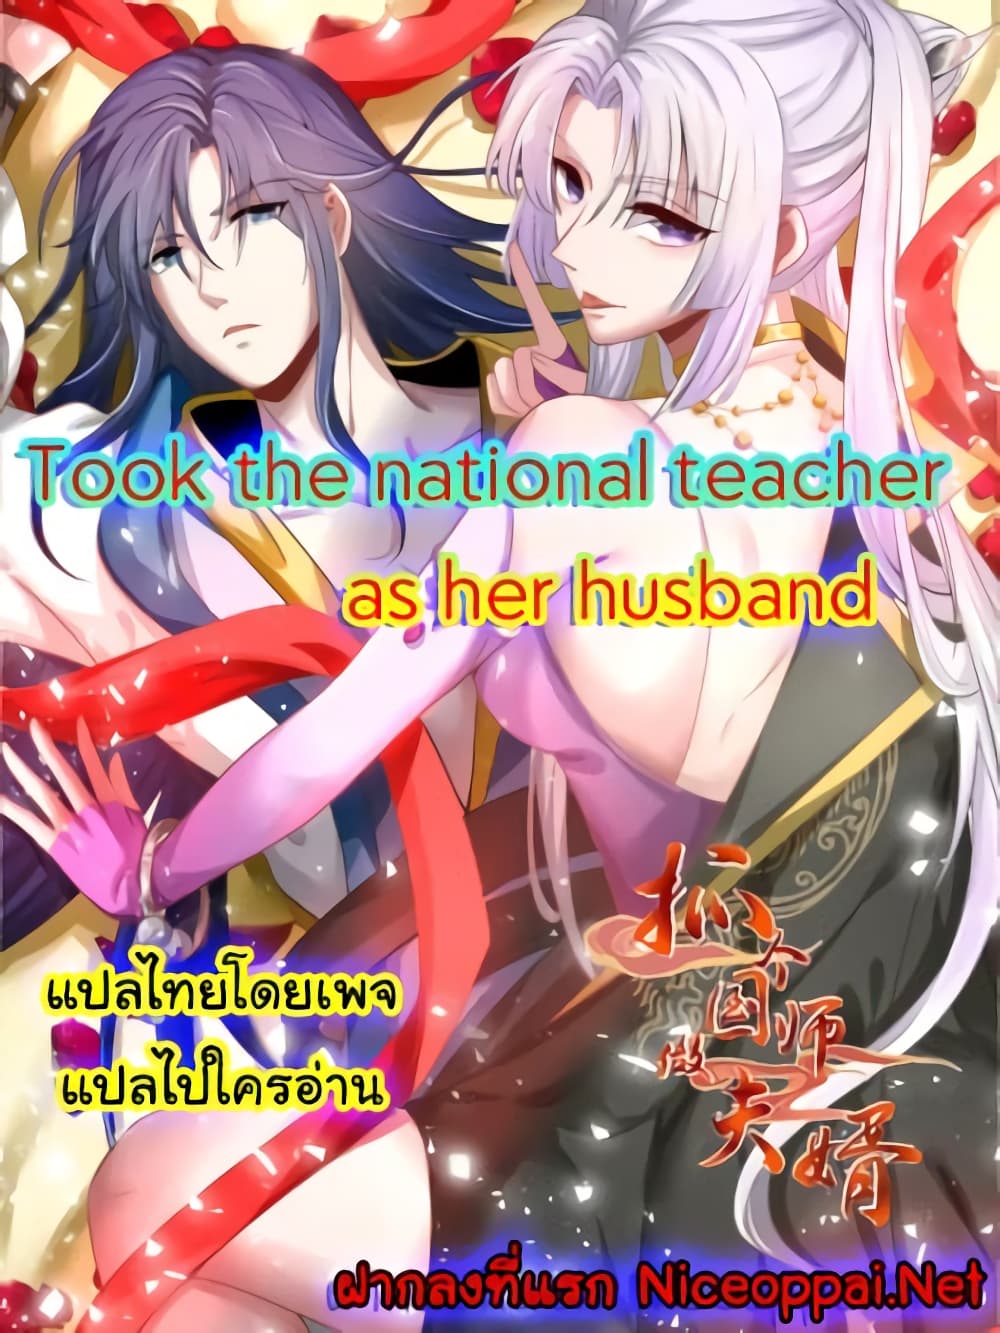 Took the National Teacher as Her Husband 12 (1)